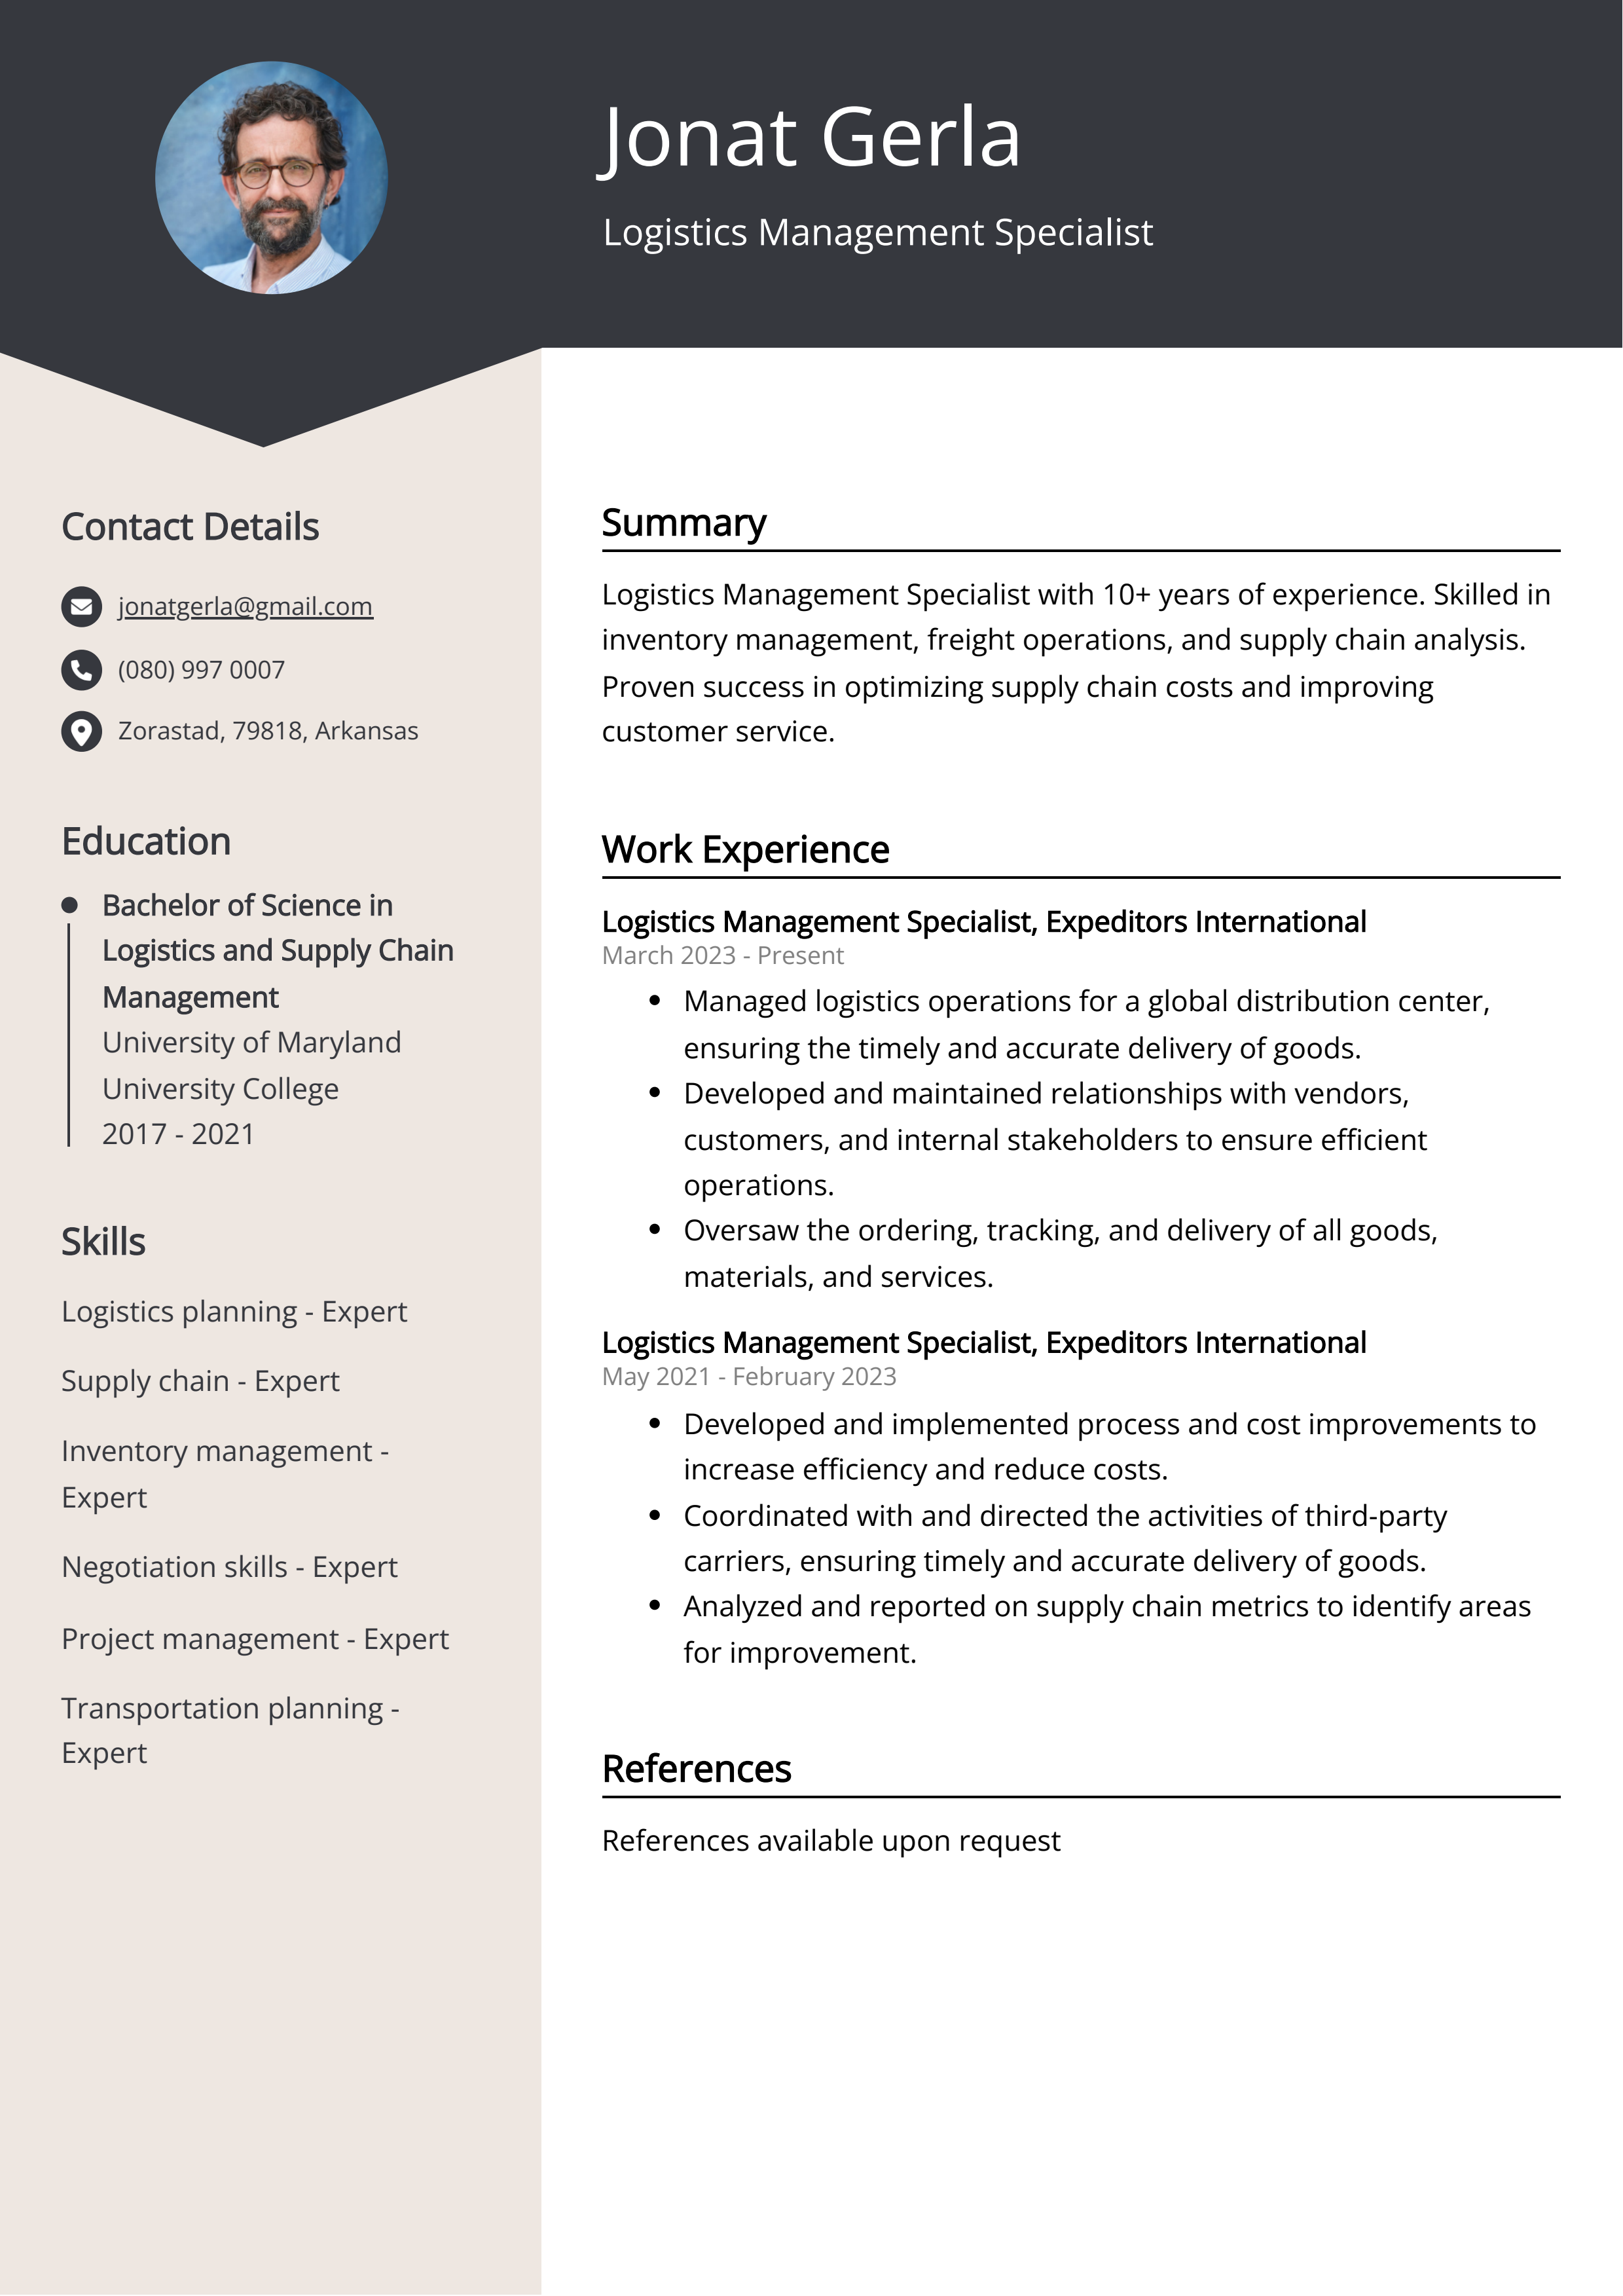 Logistics Management Specialist CV Example